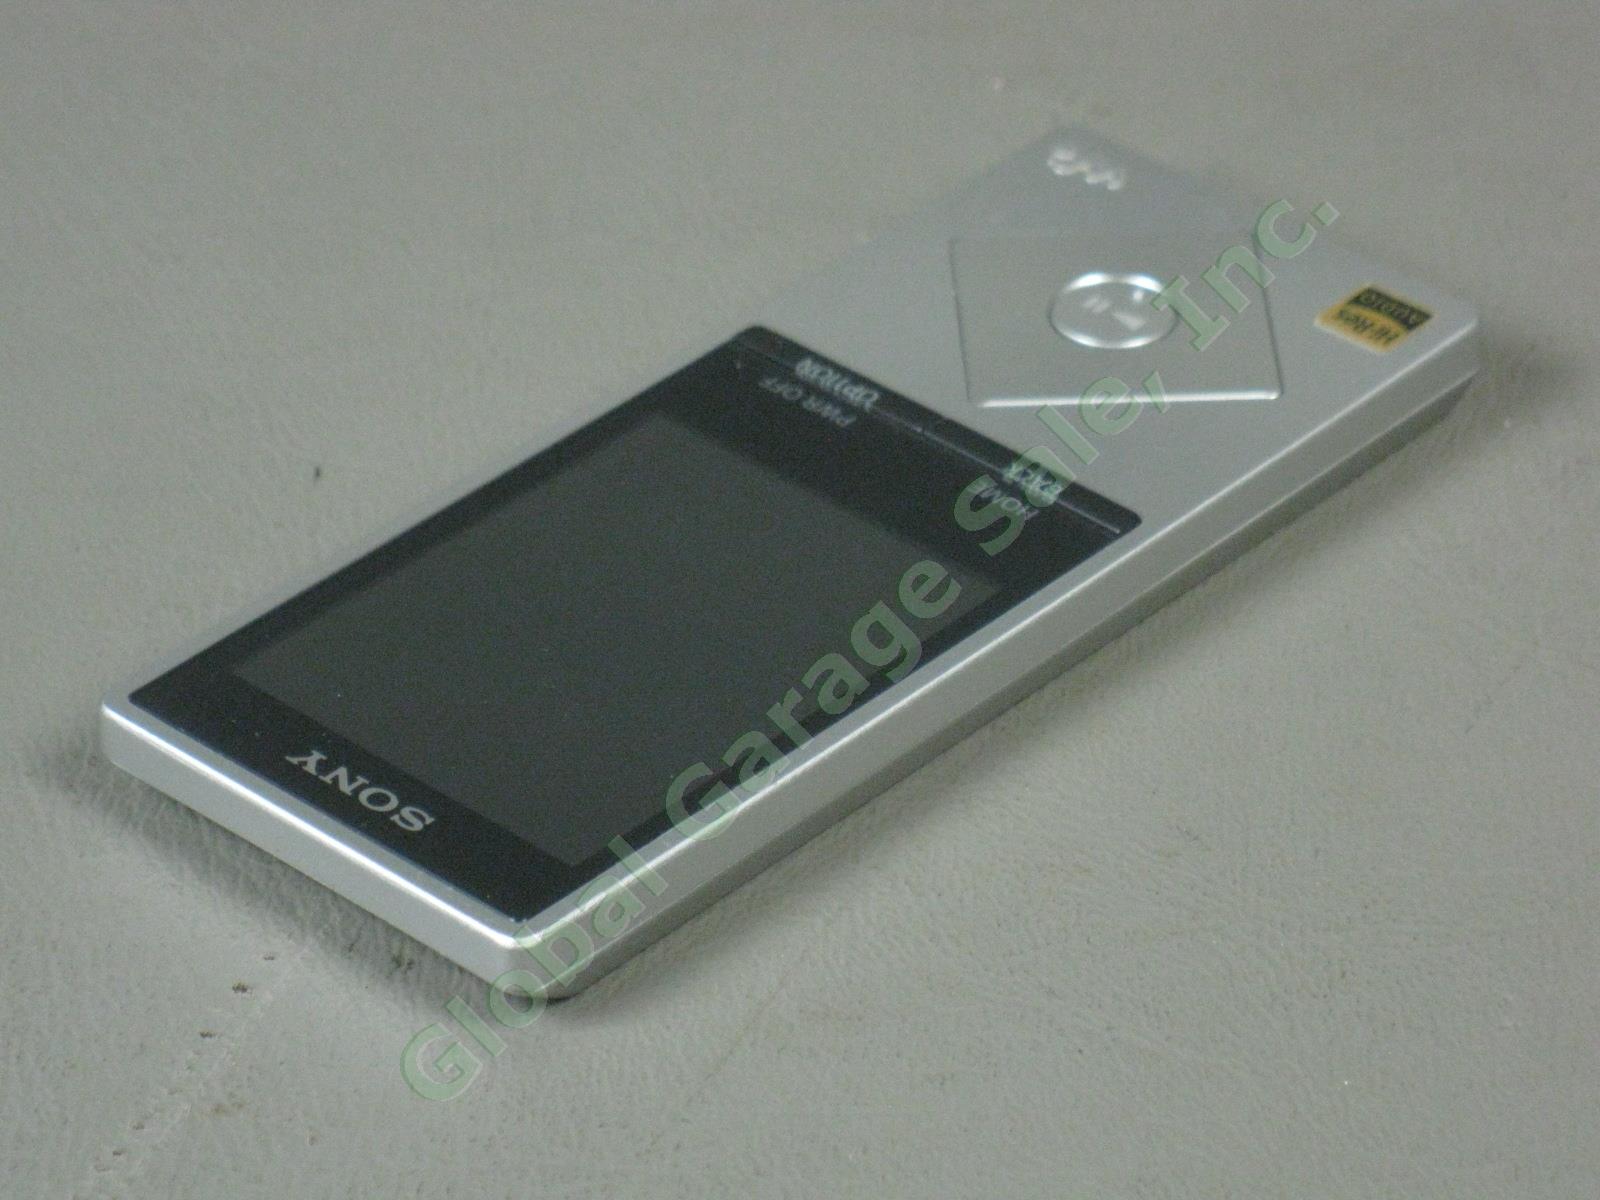 Sony Walkman NWZ-A17 64GB Hi-Res Silver Digital Media Music Player No Reserve!! 5